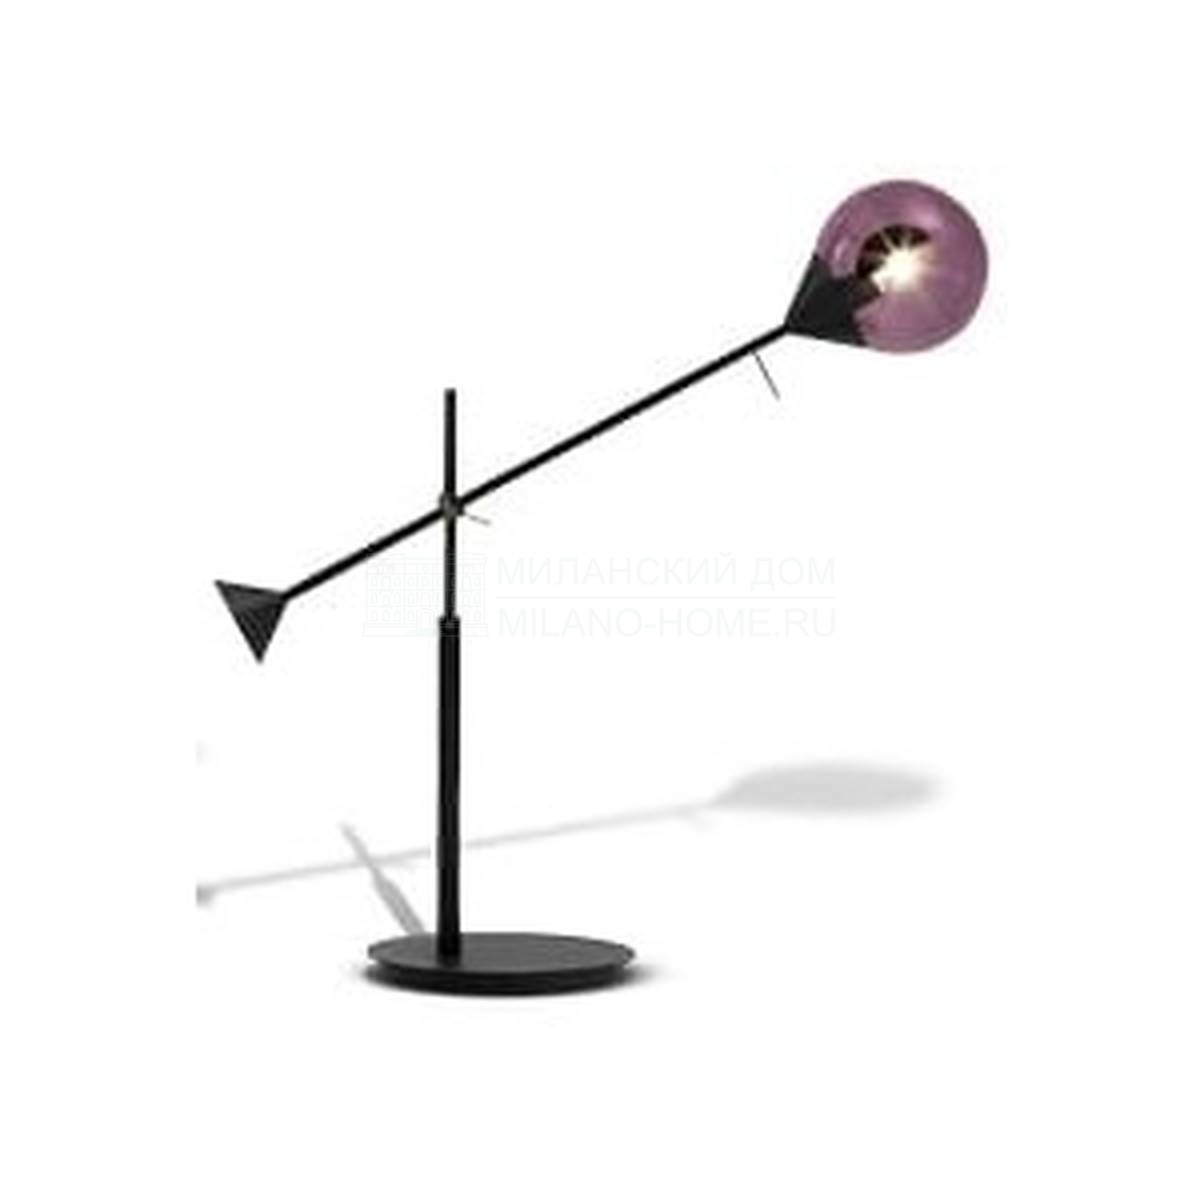 Настольная лампа Kendama table lamp из Италии фабрики GIORGETTI